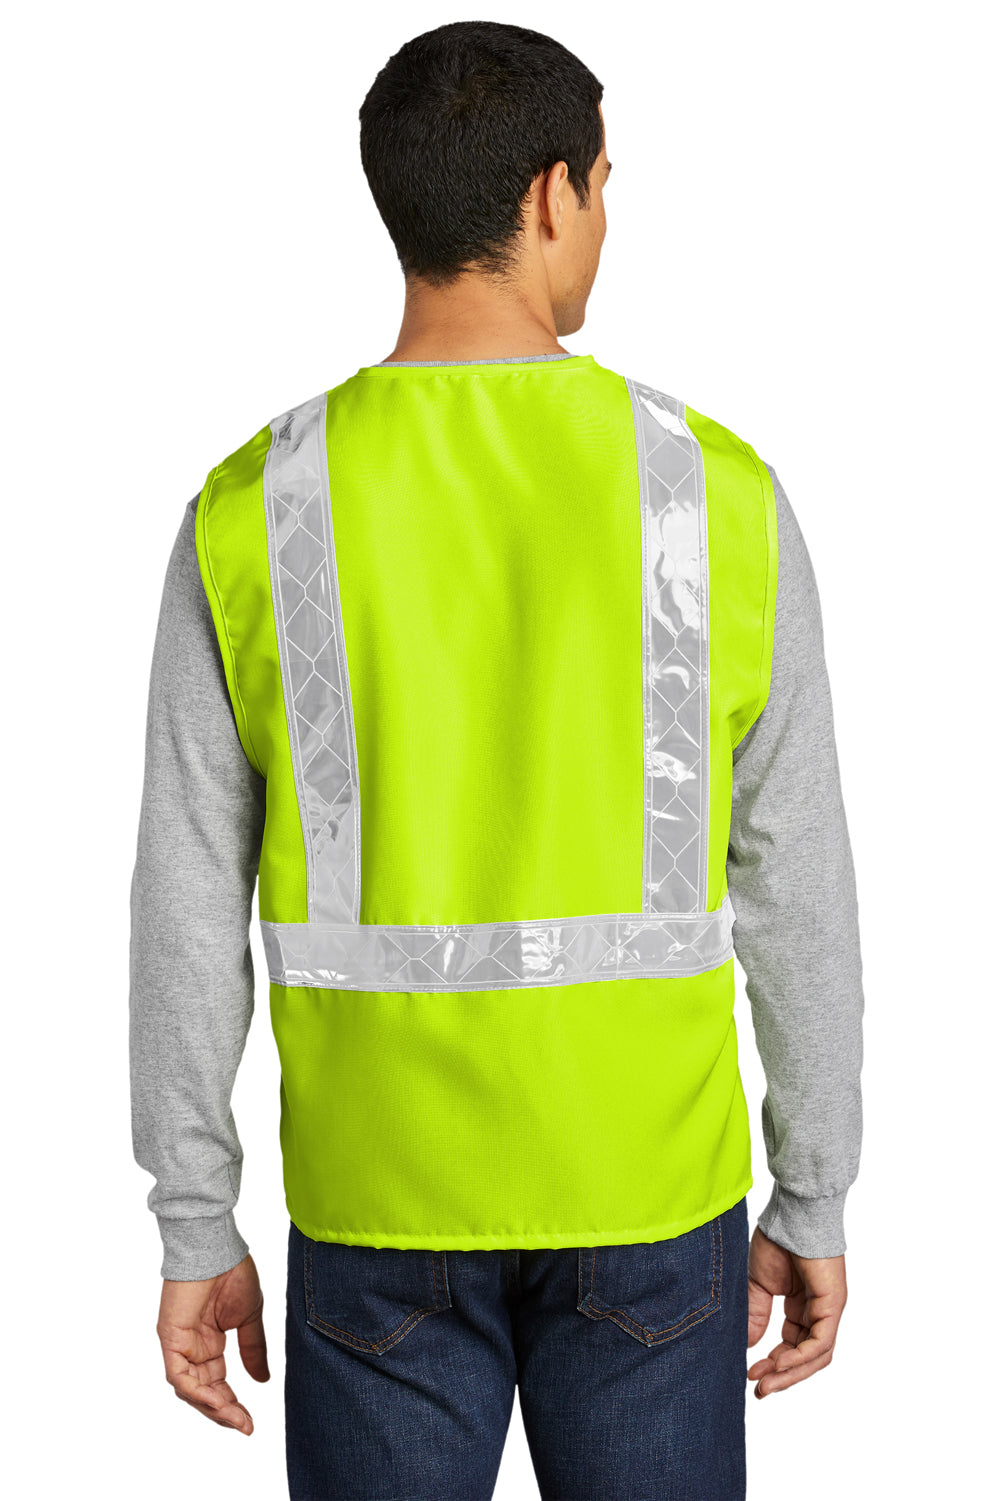 Port Authority SV01 Enhanced Visibility Vest Safety Yellow Back